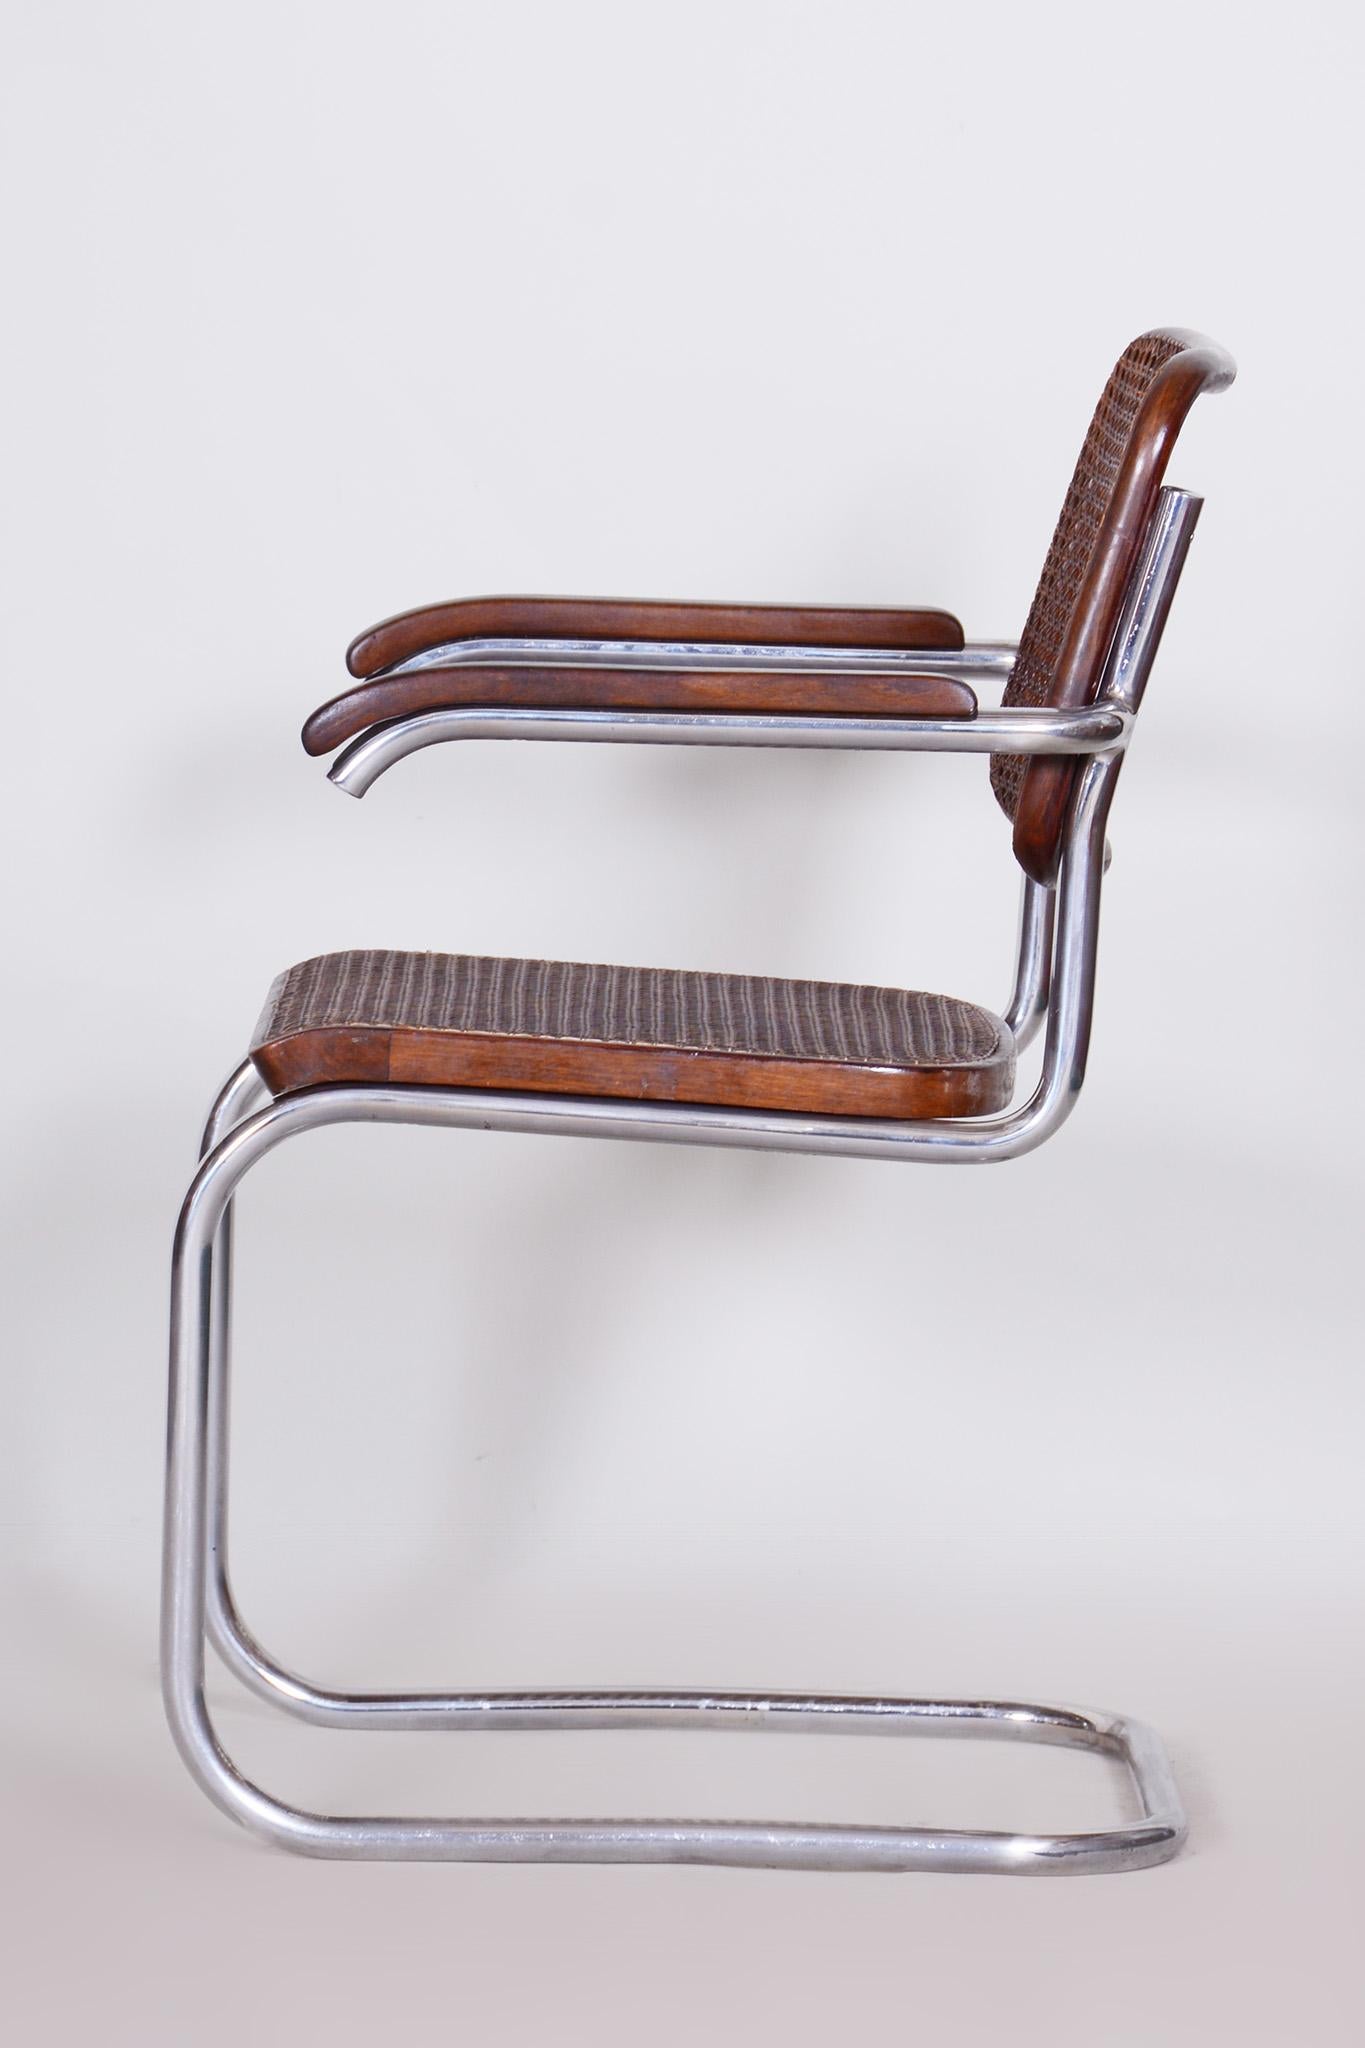 20th Century Restored Bauhaus Armchair, Marcel Breuer, Thonet, Beech, Chrome, Germany, 1930s For Sale